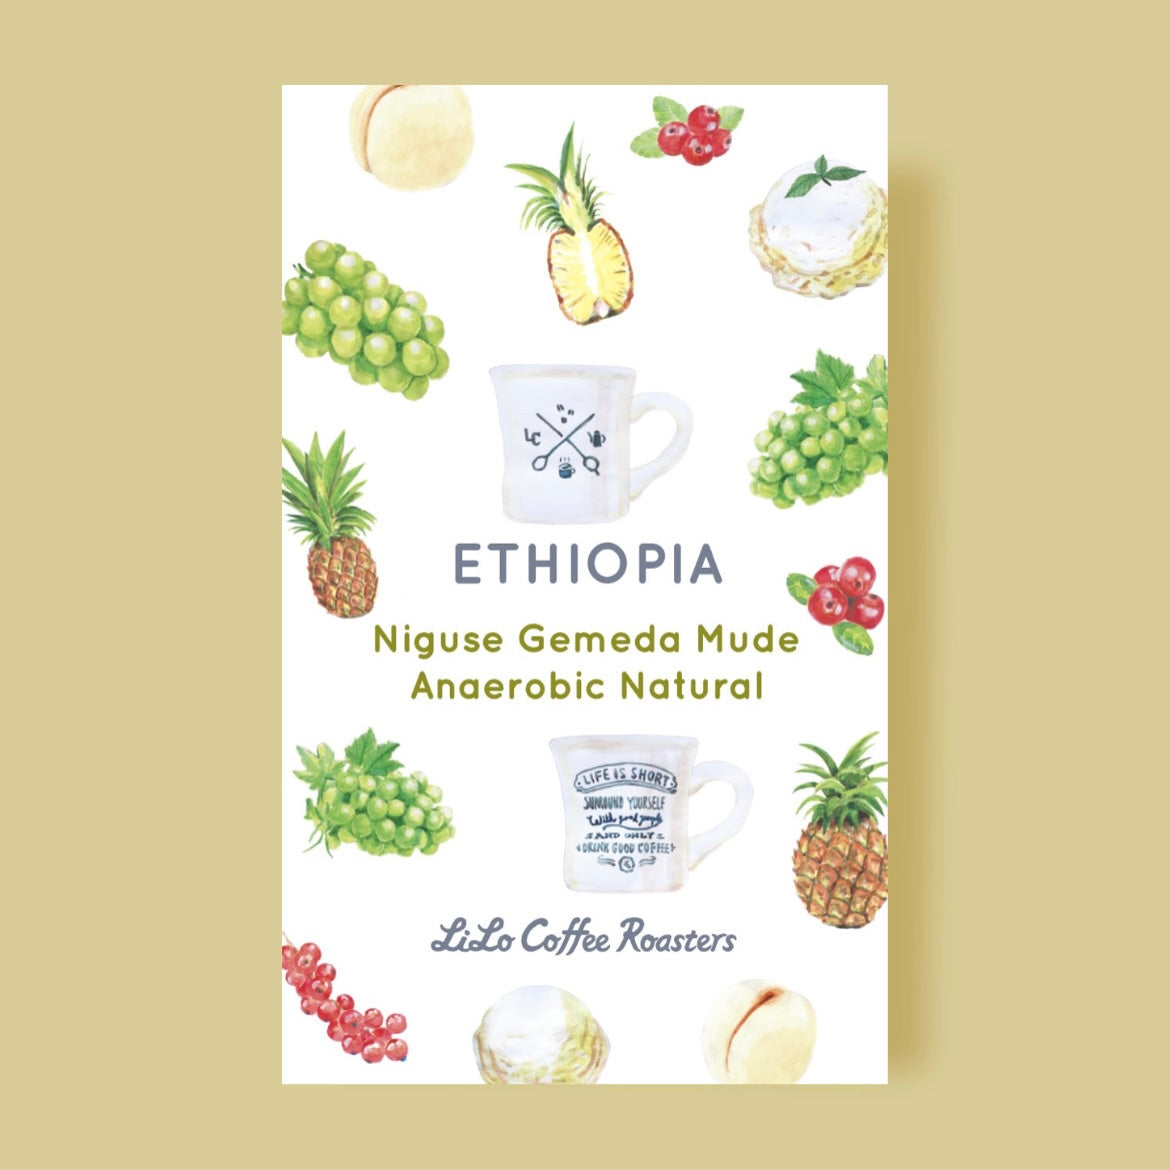 ETHIOPIA Niguse Gemeda Mude Anaerobic Natural